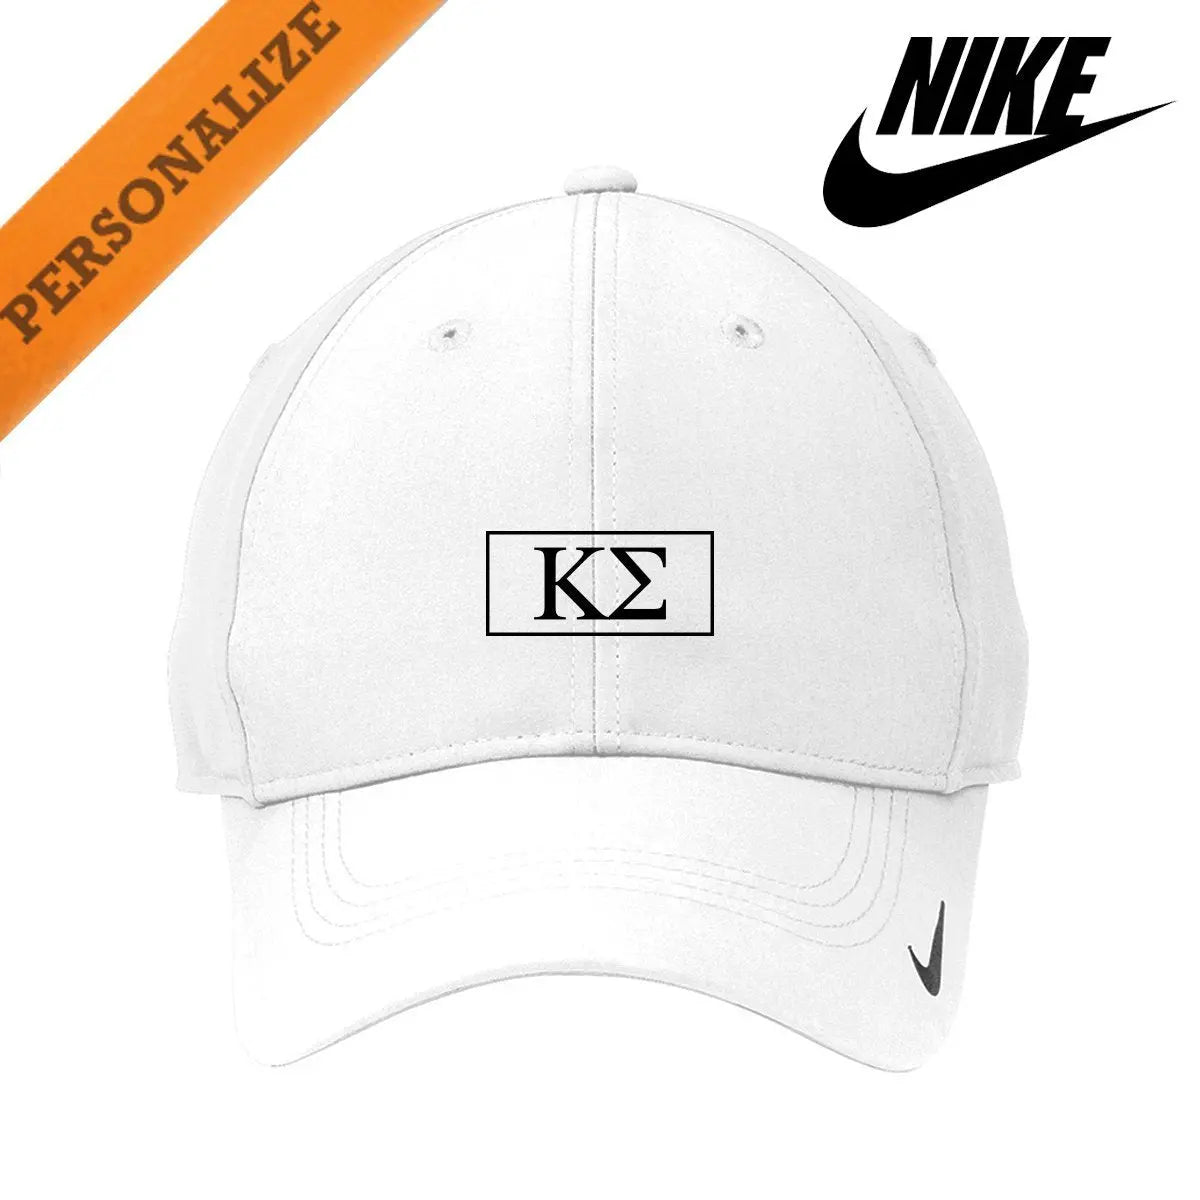 Kappa Sig Personalized White Nike Dri-FIT Performance Hat - Kappa Sigma Official Store